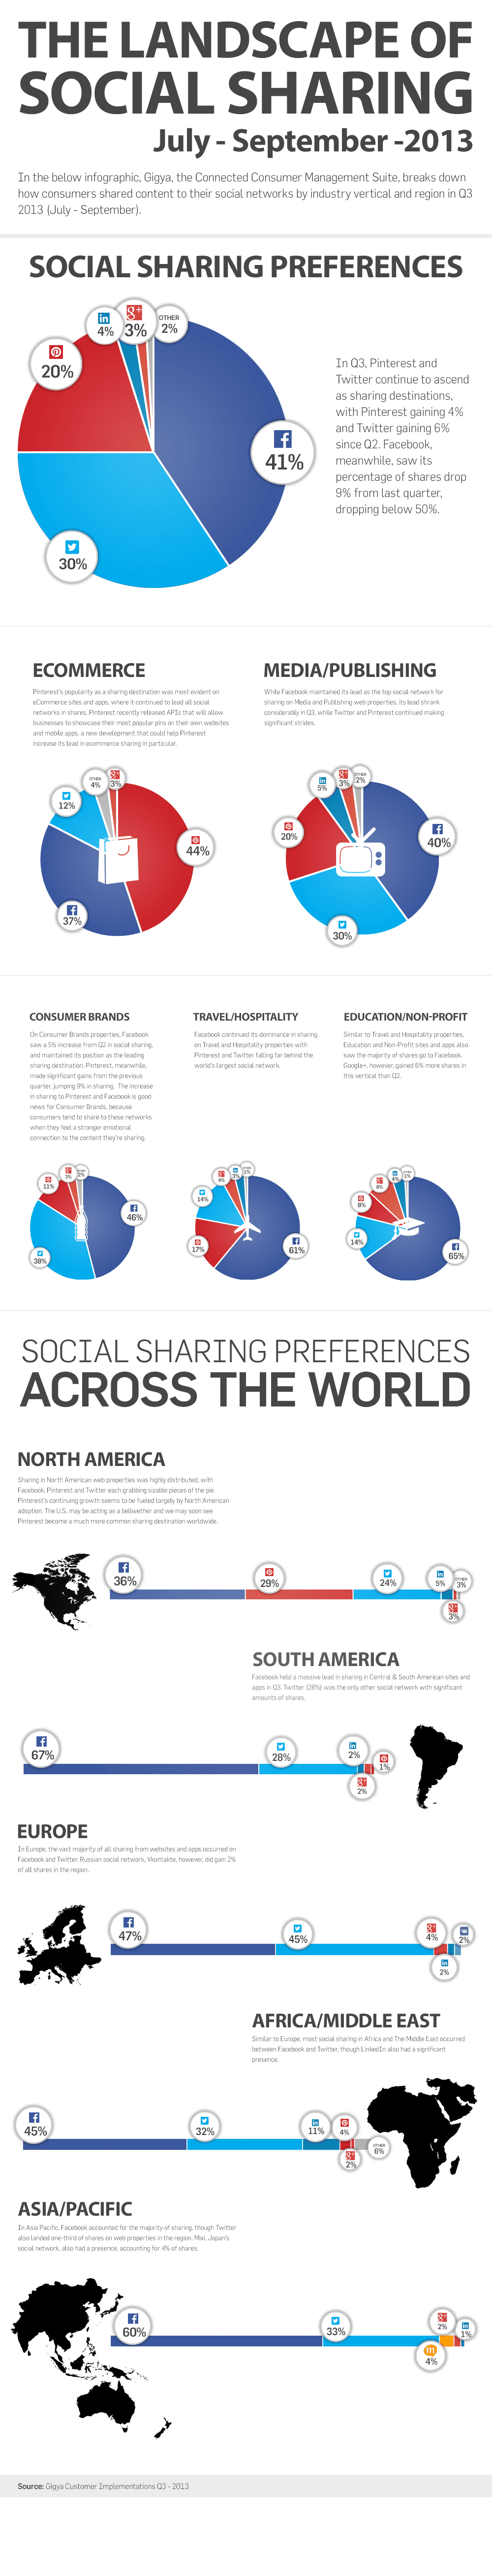 social-network-most-sharing